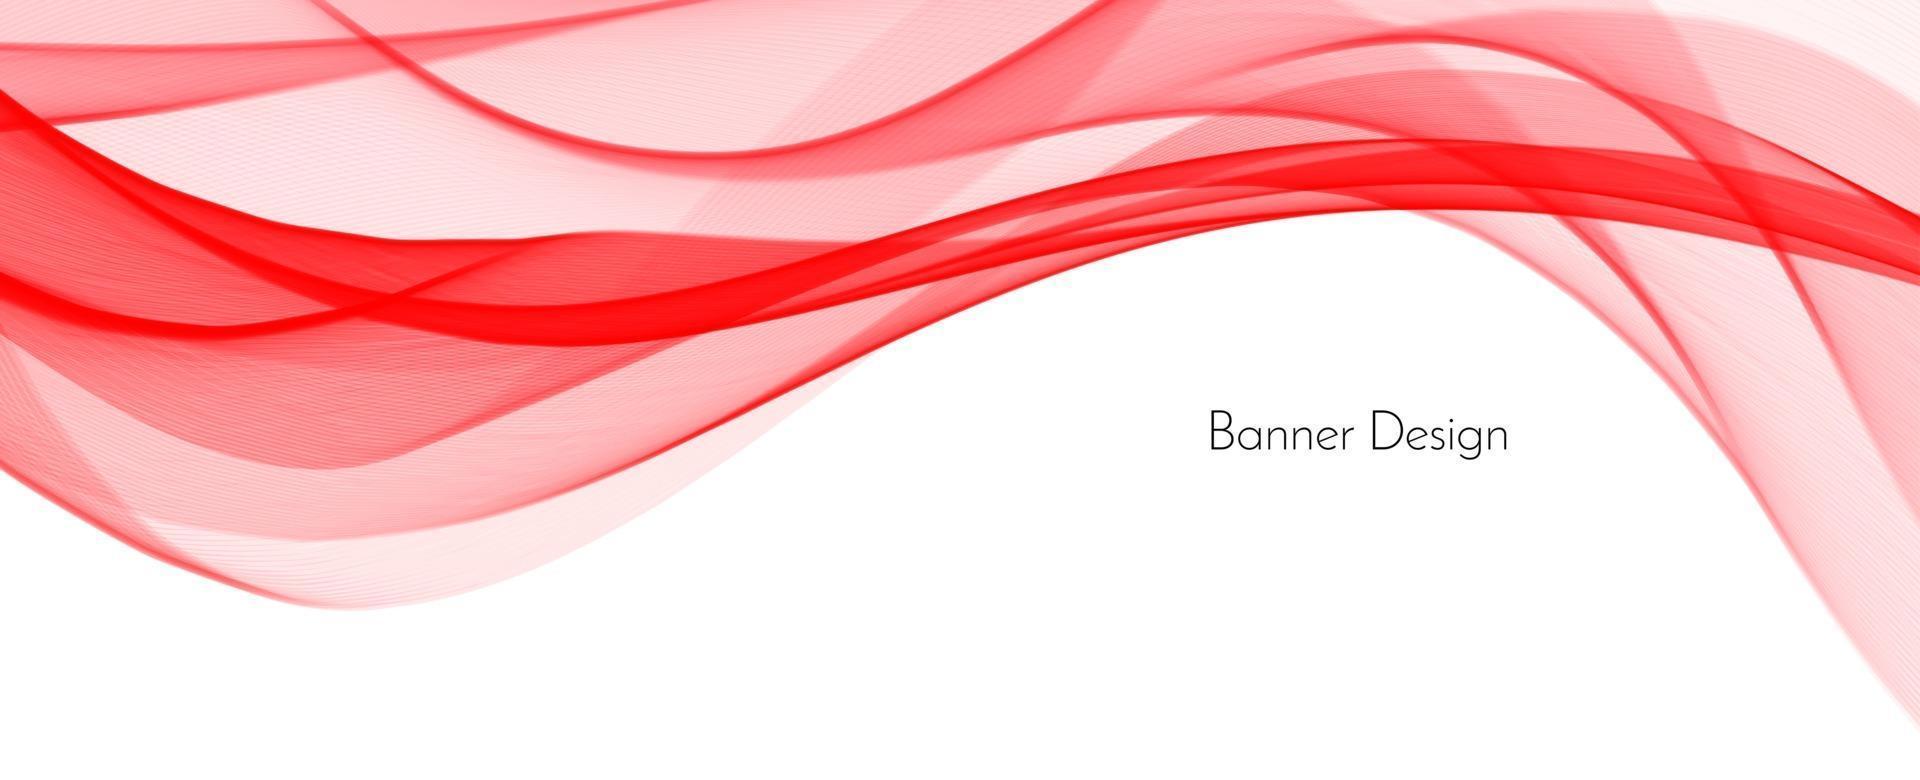 abstracte rode moderne decoratieve stijlvolle golf banner achtergrond vector